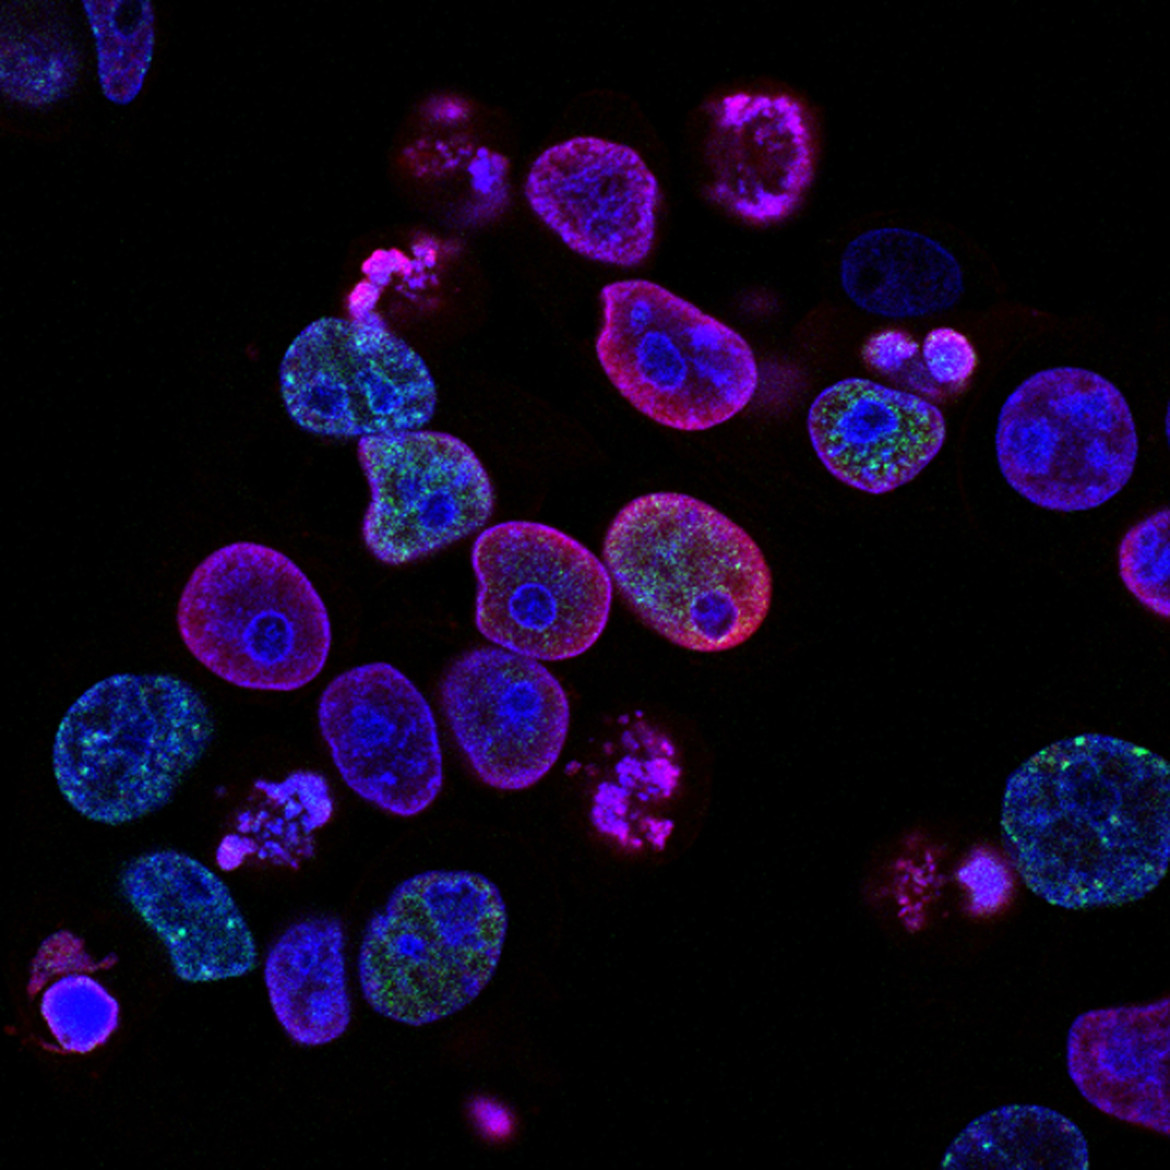 Células malignas de cáncer. Foto: Unsplash